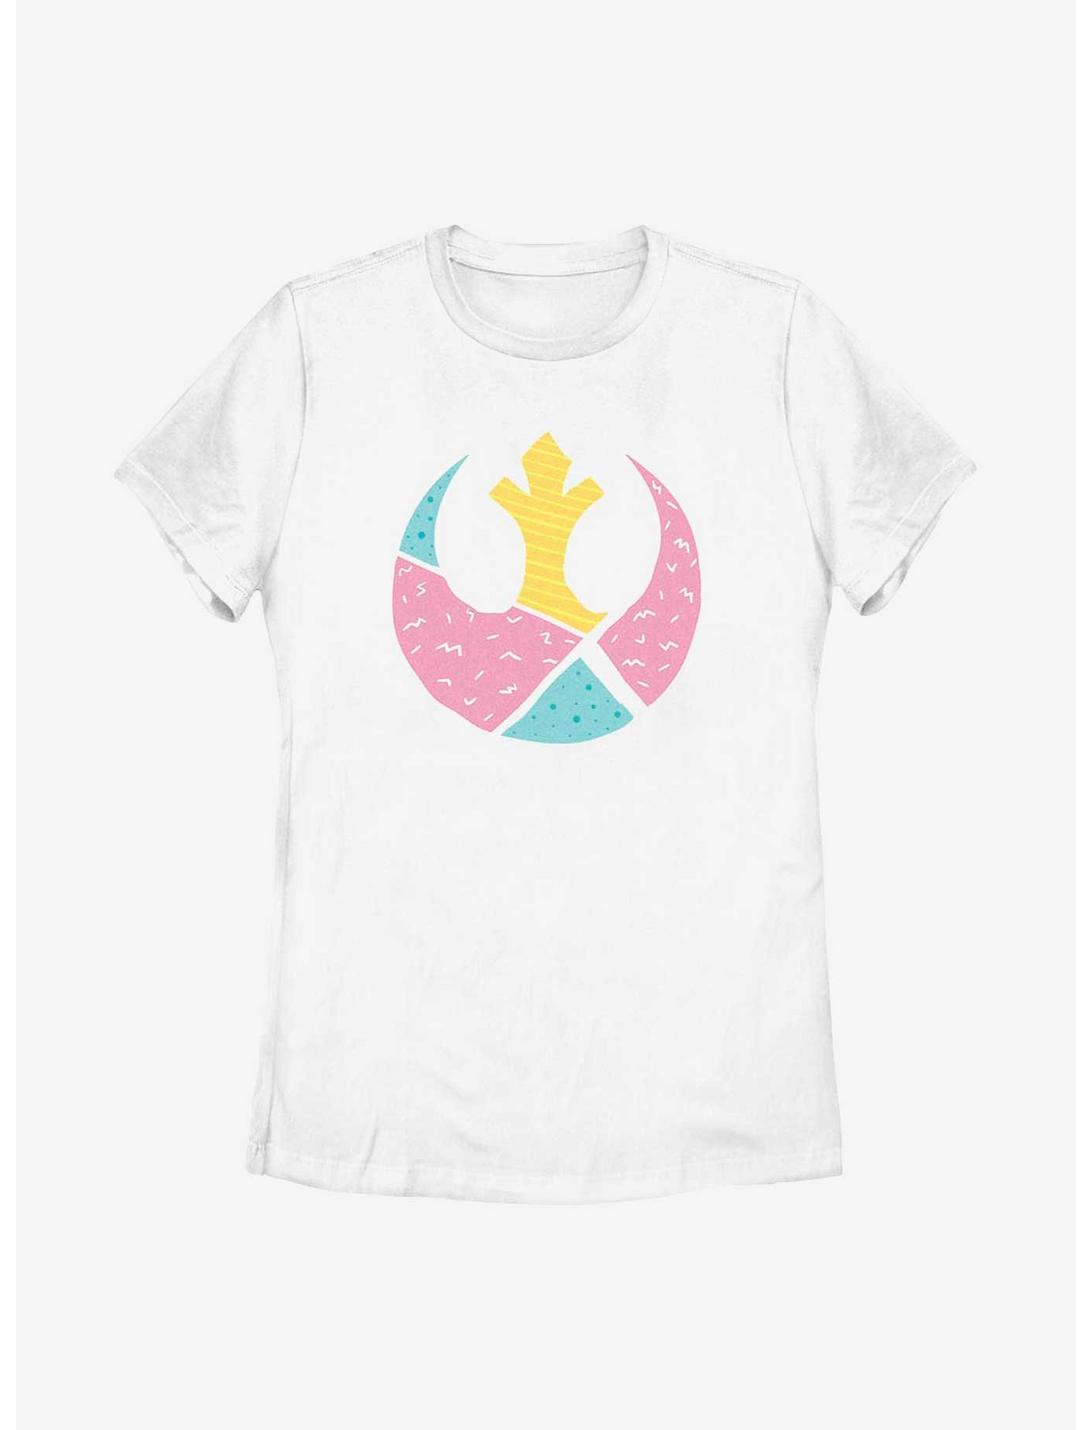 Star Wars Geometric Shaped Rebel Symbol Womens T-Shirt, WHITE, hi-res